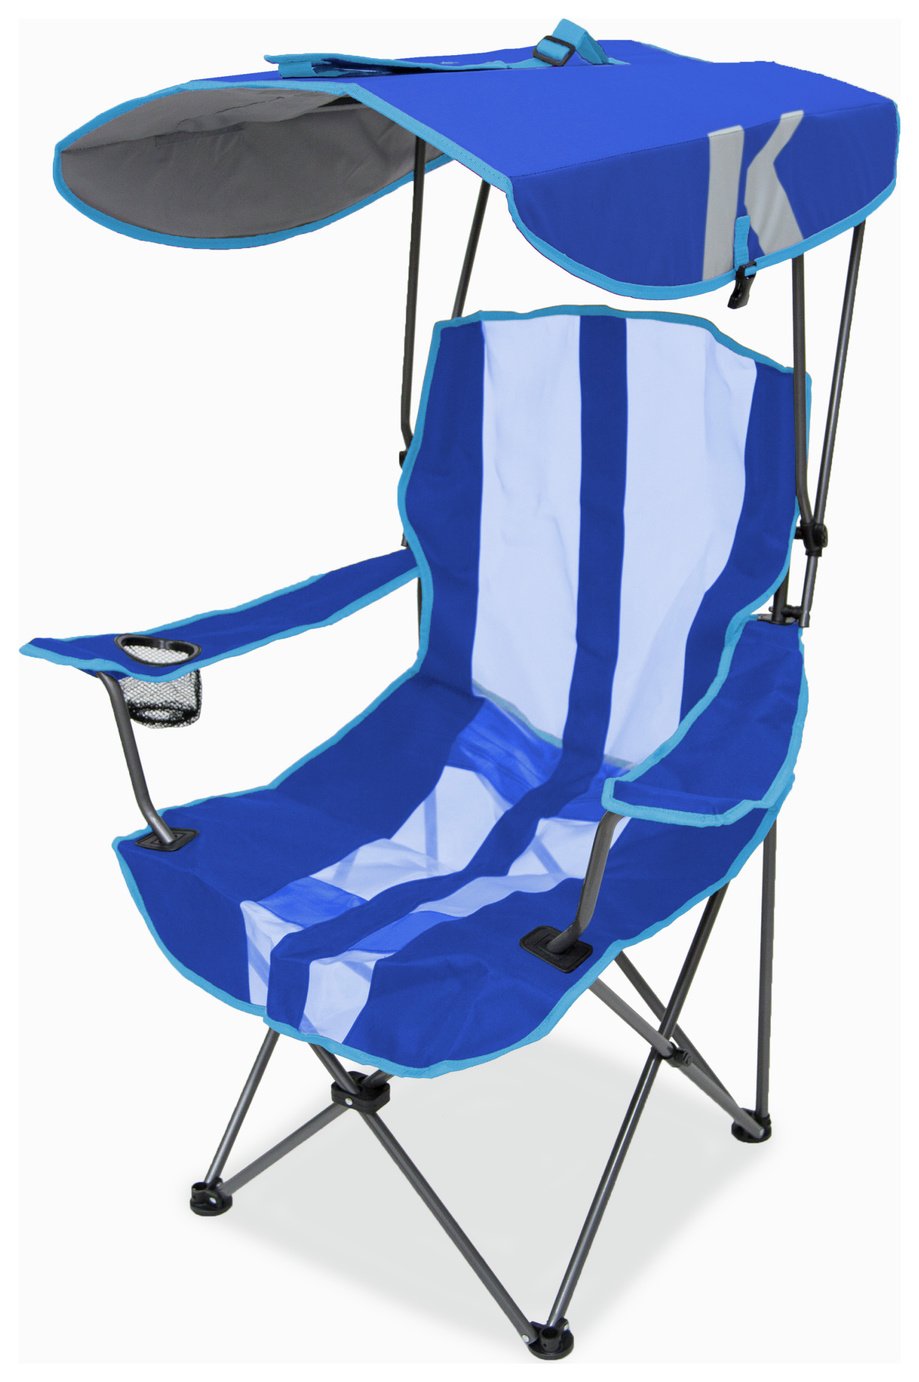 camping chairs argos ireland